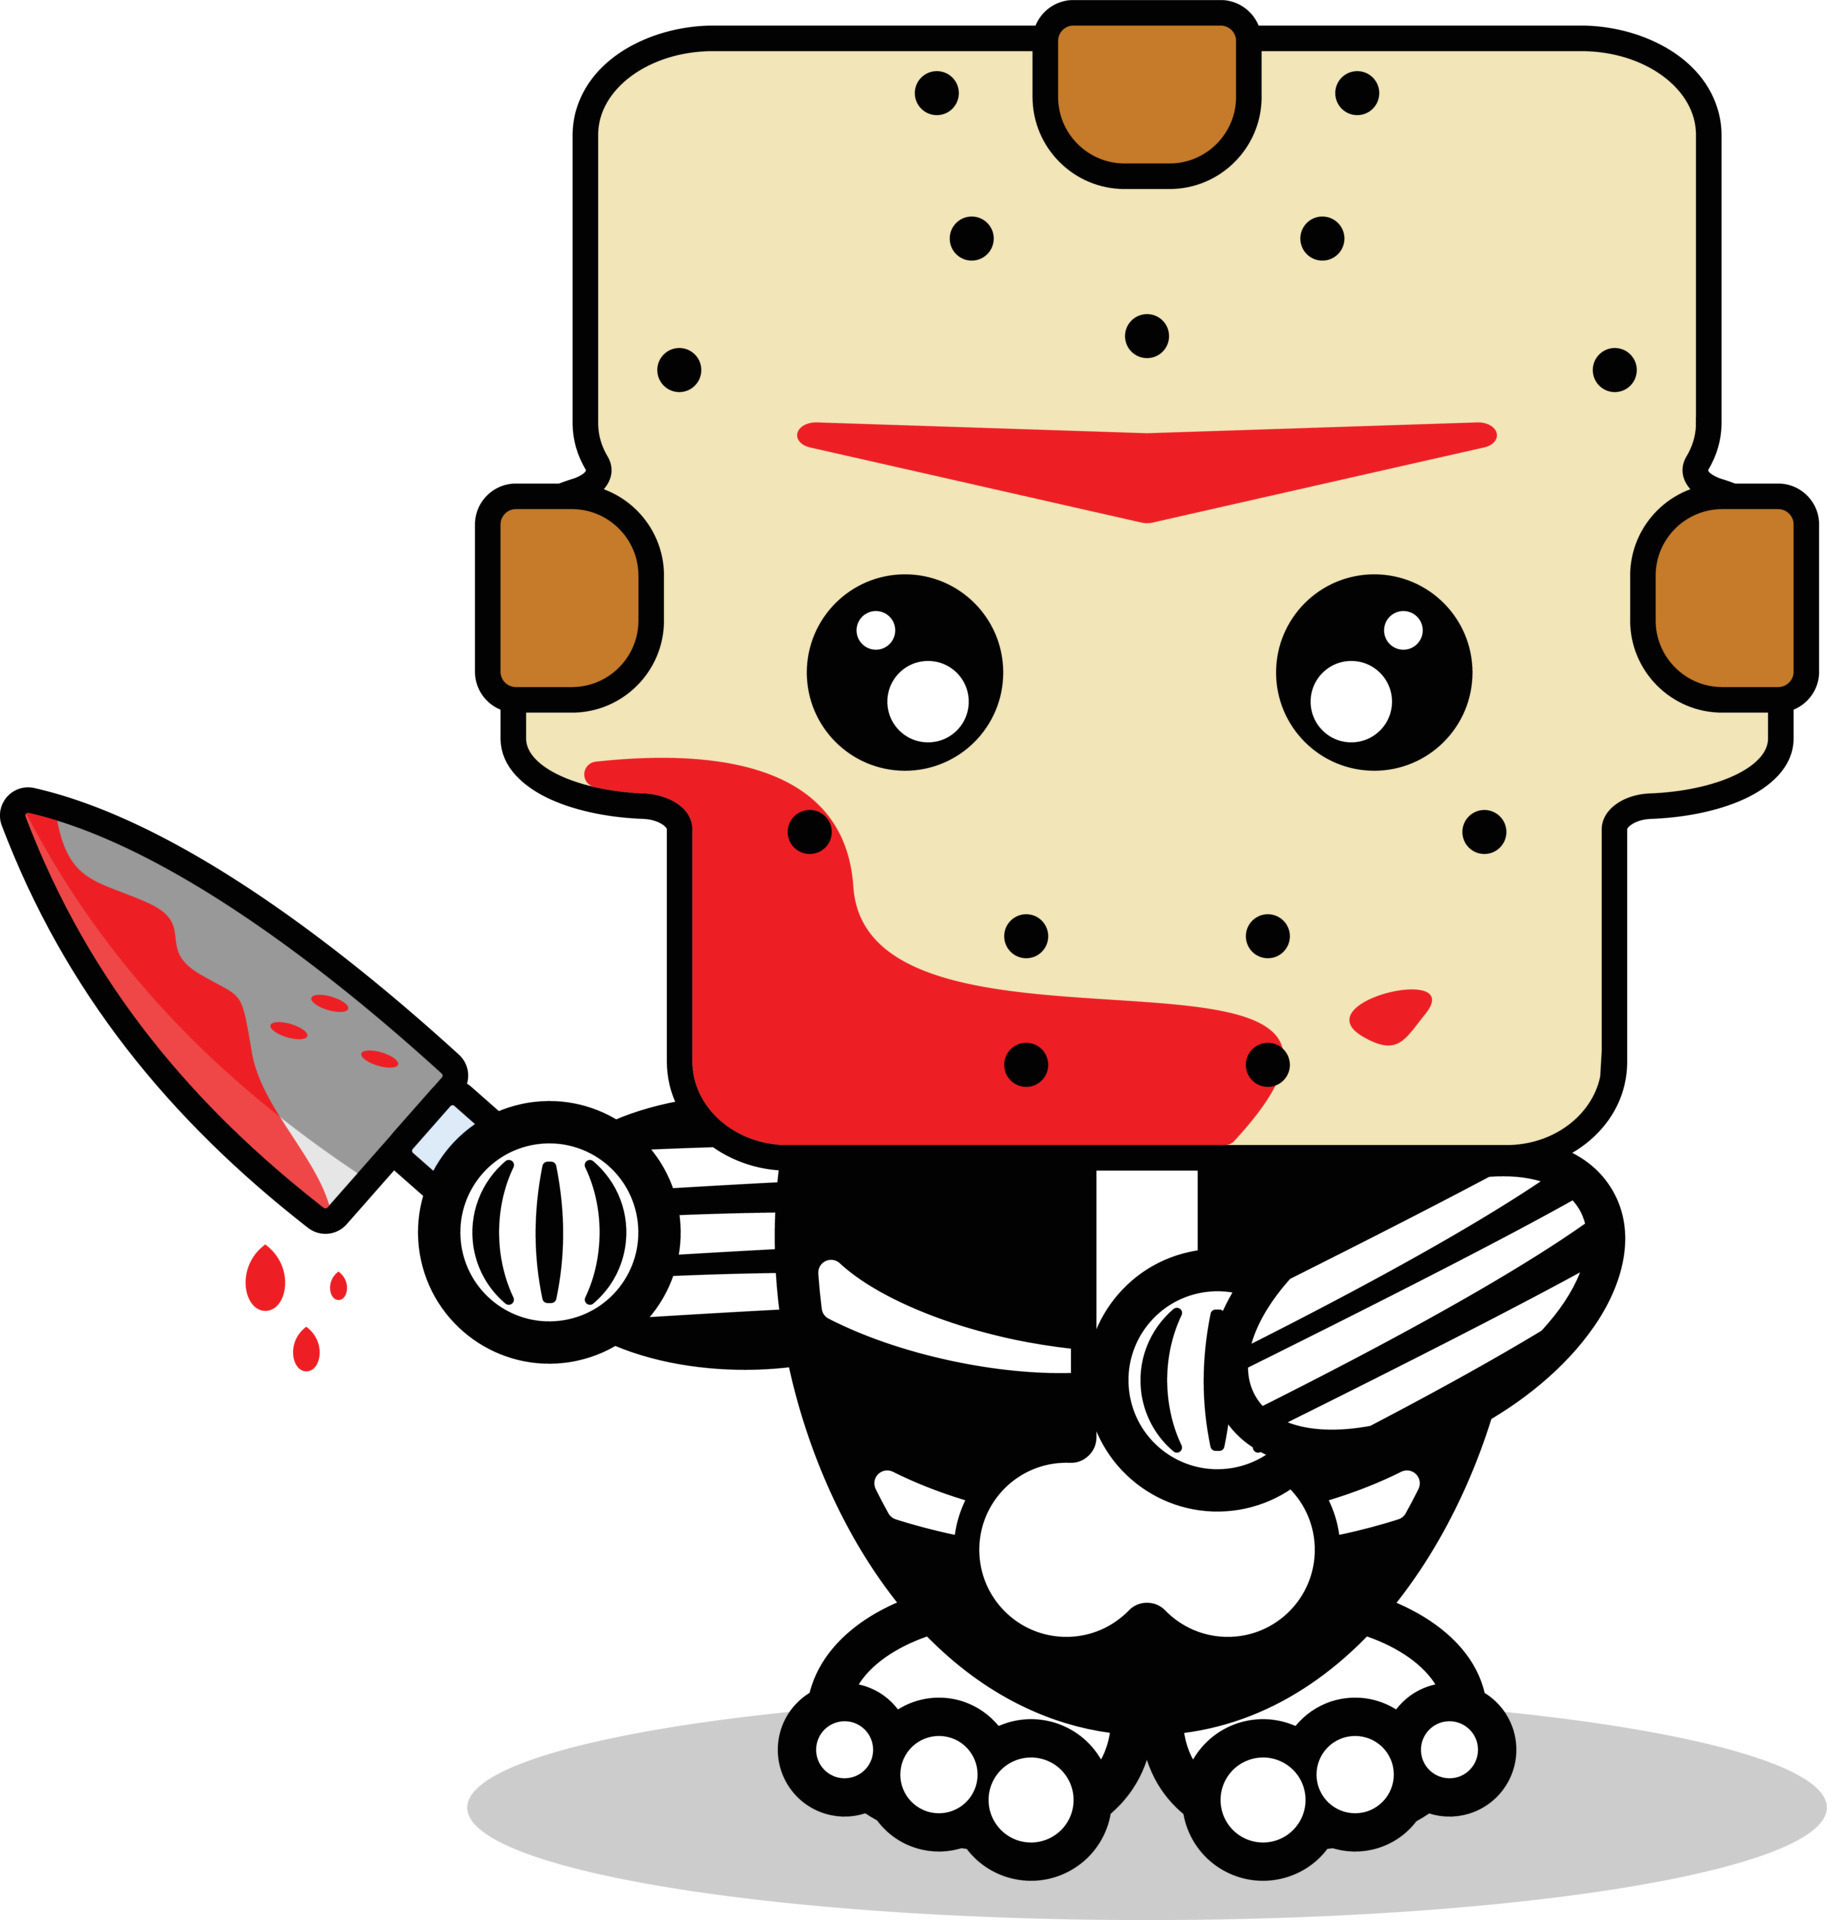 lindo jason voorhees hueso mascota personaje dibujos animados vector ilustración sosteniendo cuchillo ensangrentado 10890920 Vector en Vecteezy